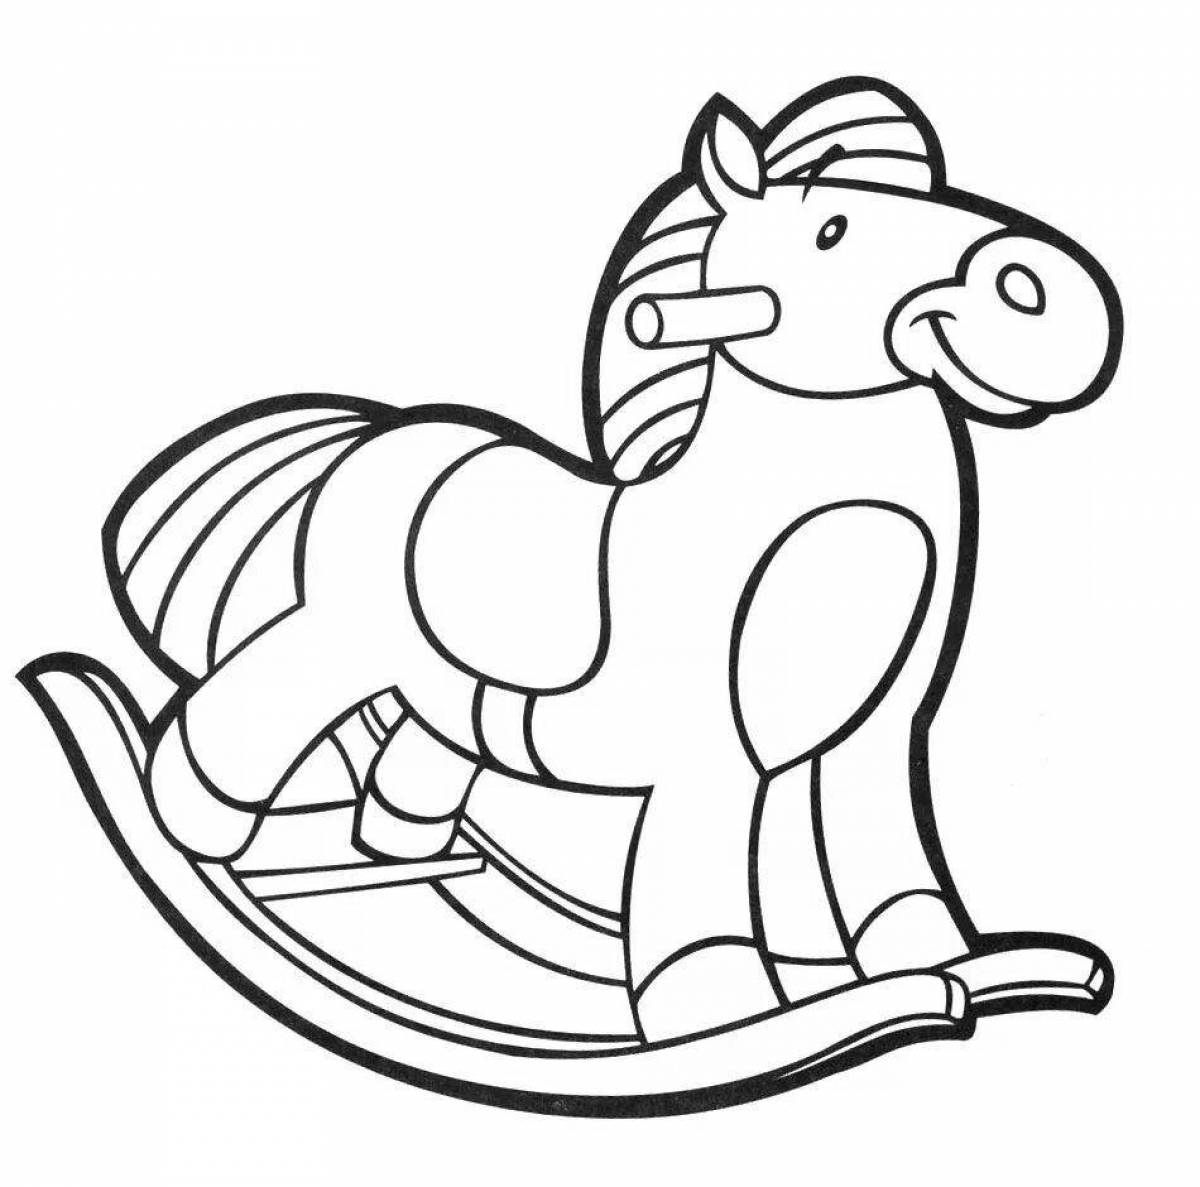 Coloring book playful rocking horse